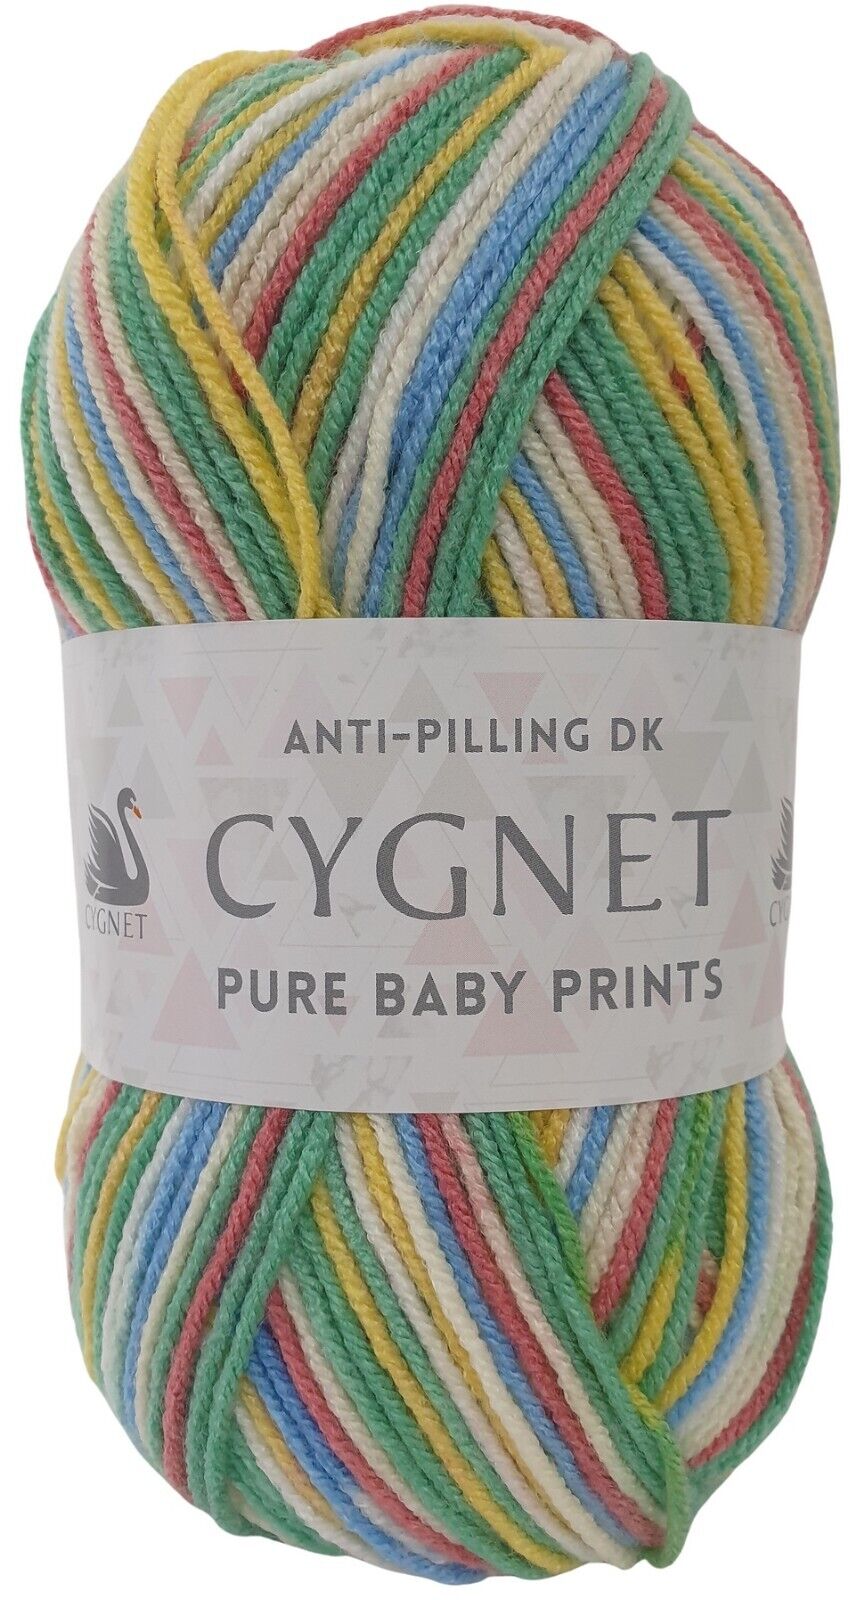 Cygnet PURE BABY PRINTS DK Knitting Yarn / Wool - 100g - Rainbow Rush